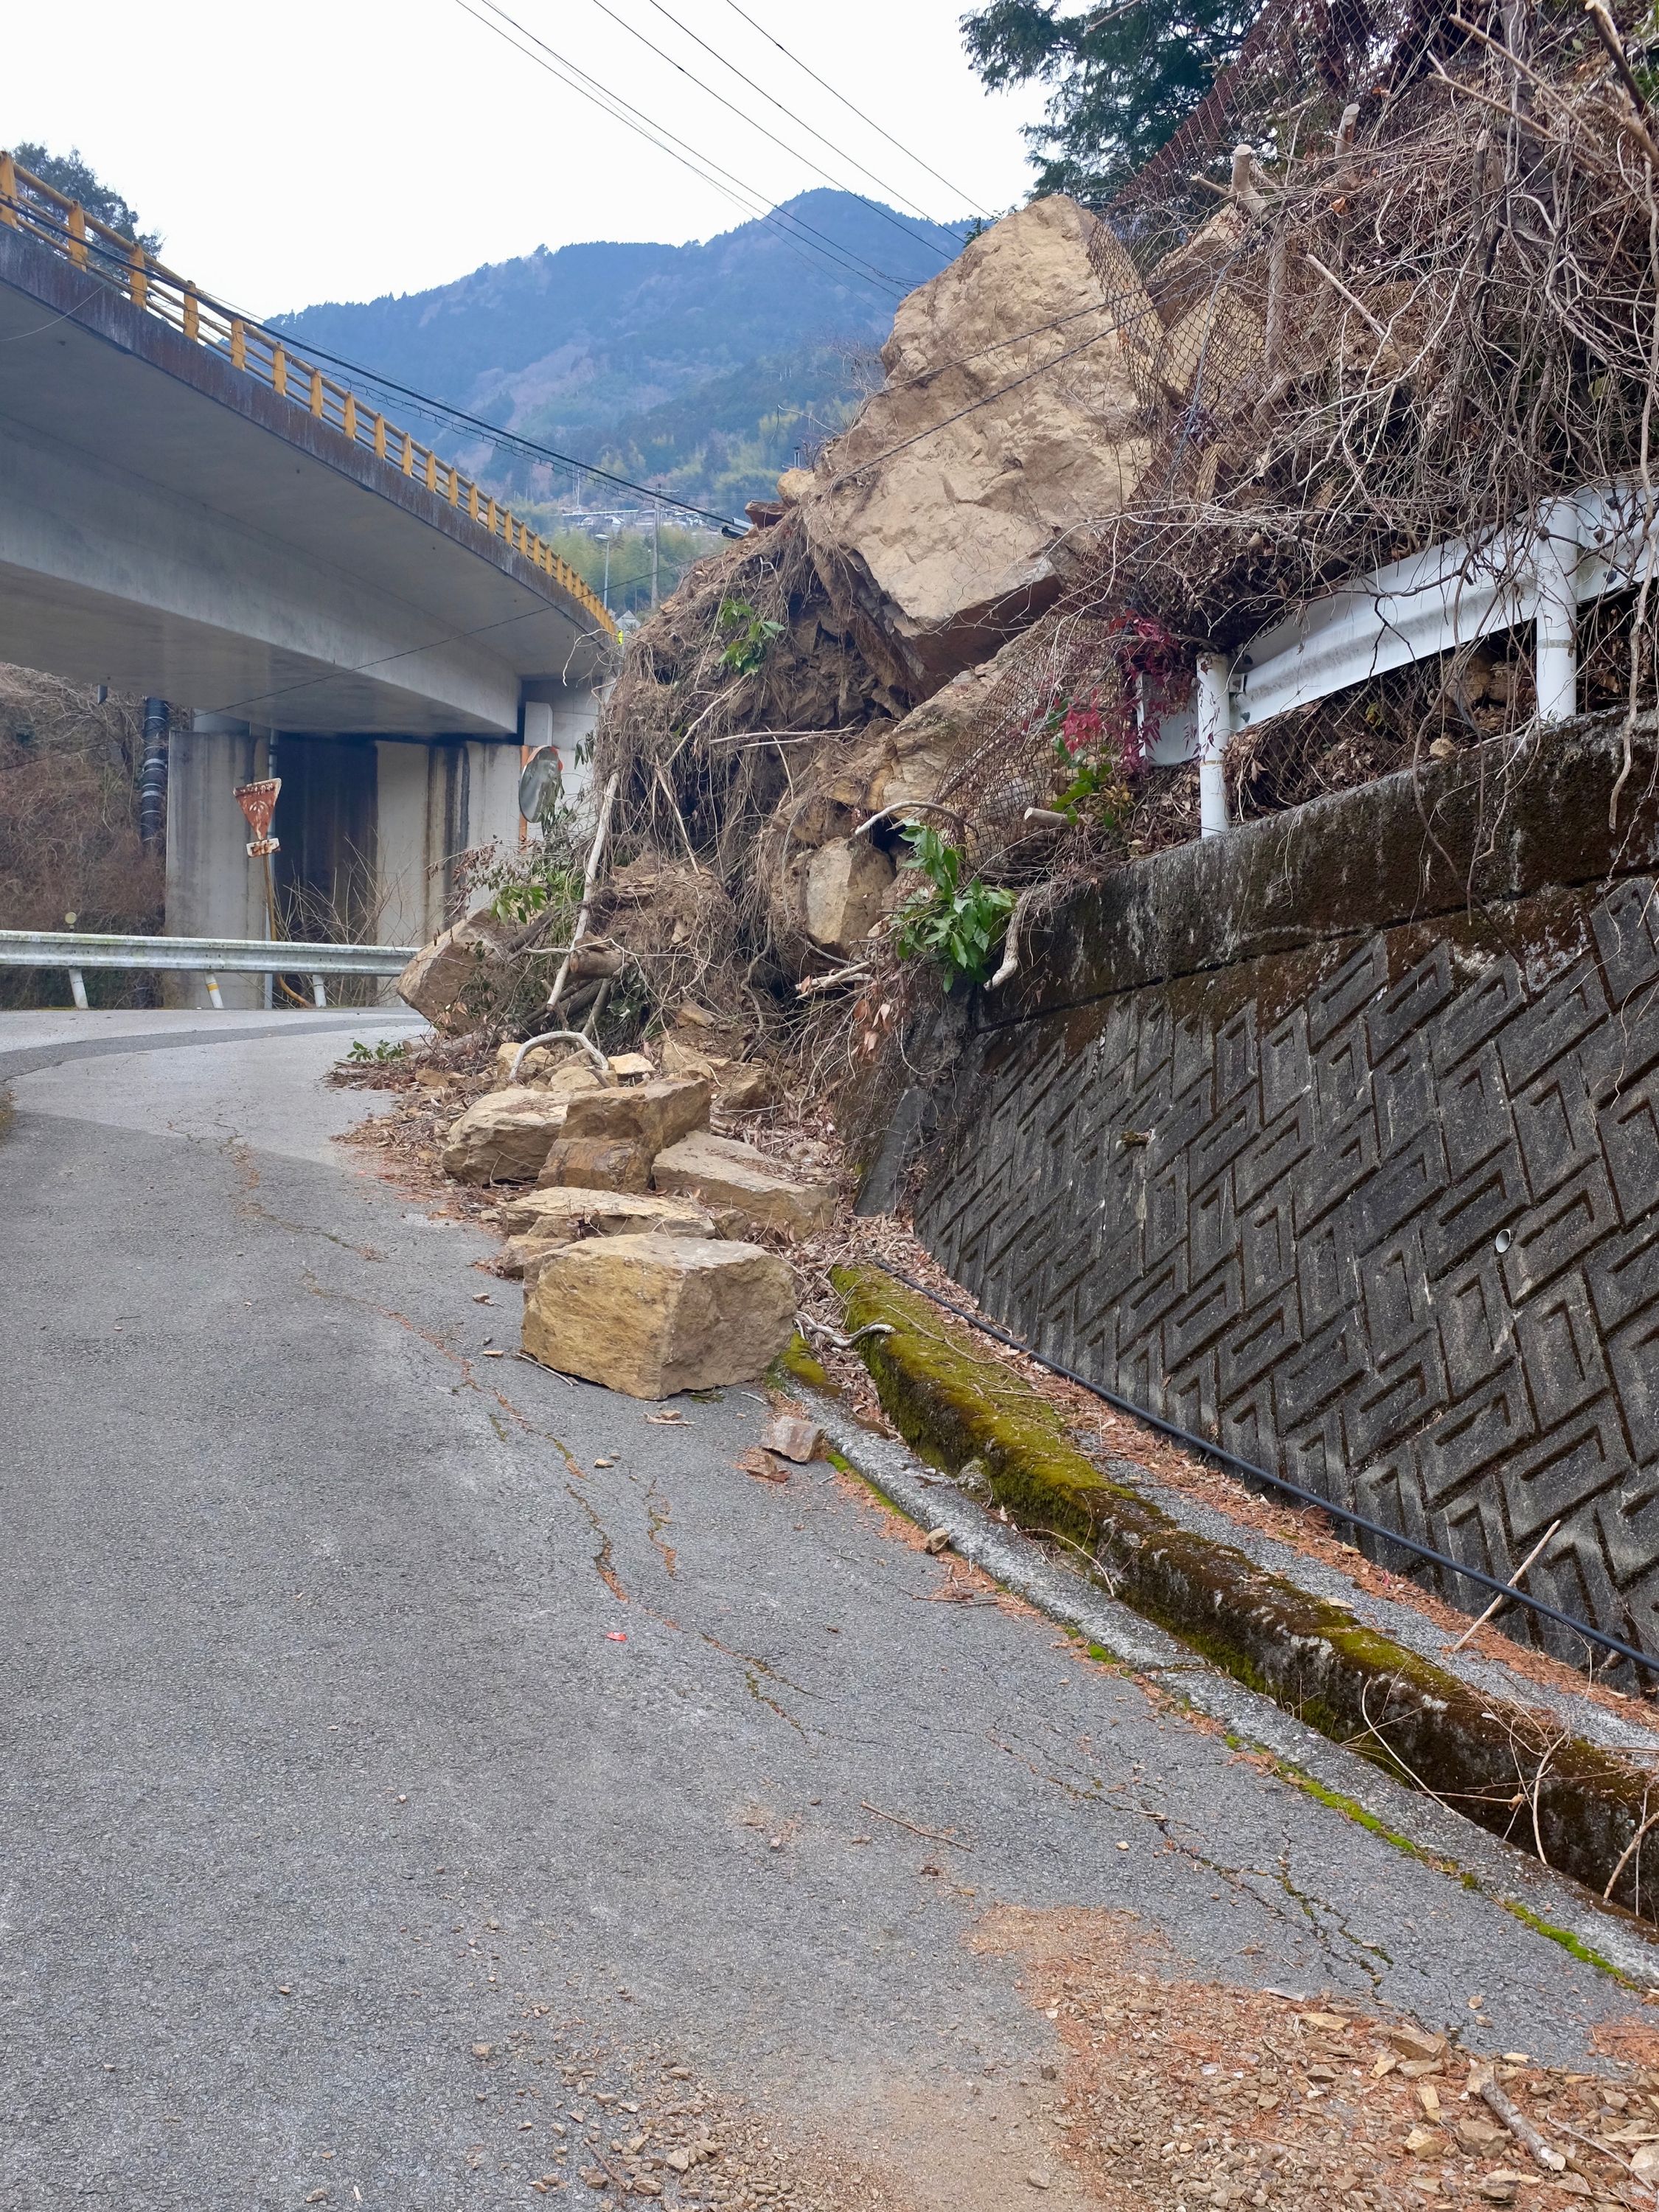 A rockfall partially blocks an old mountain road.